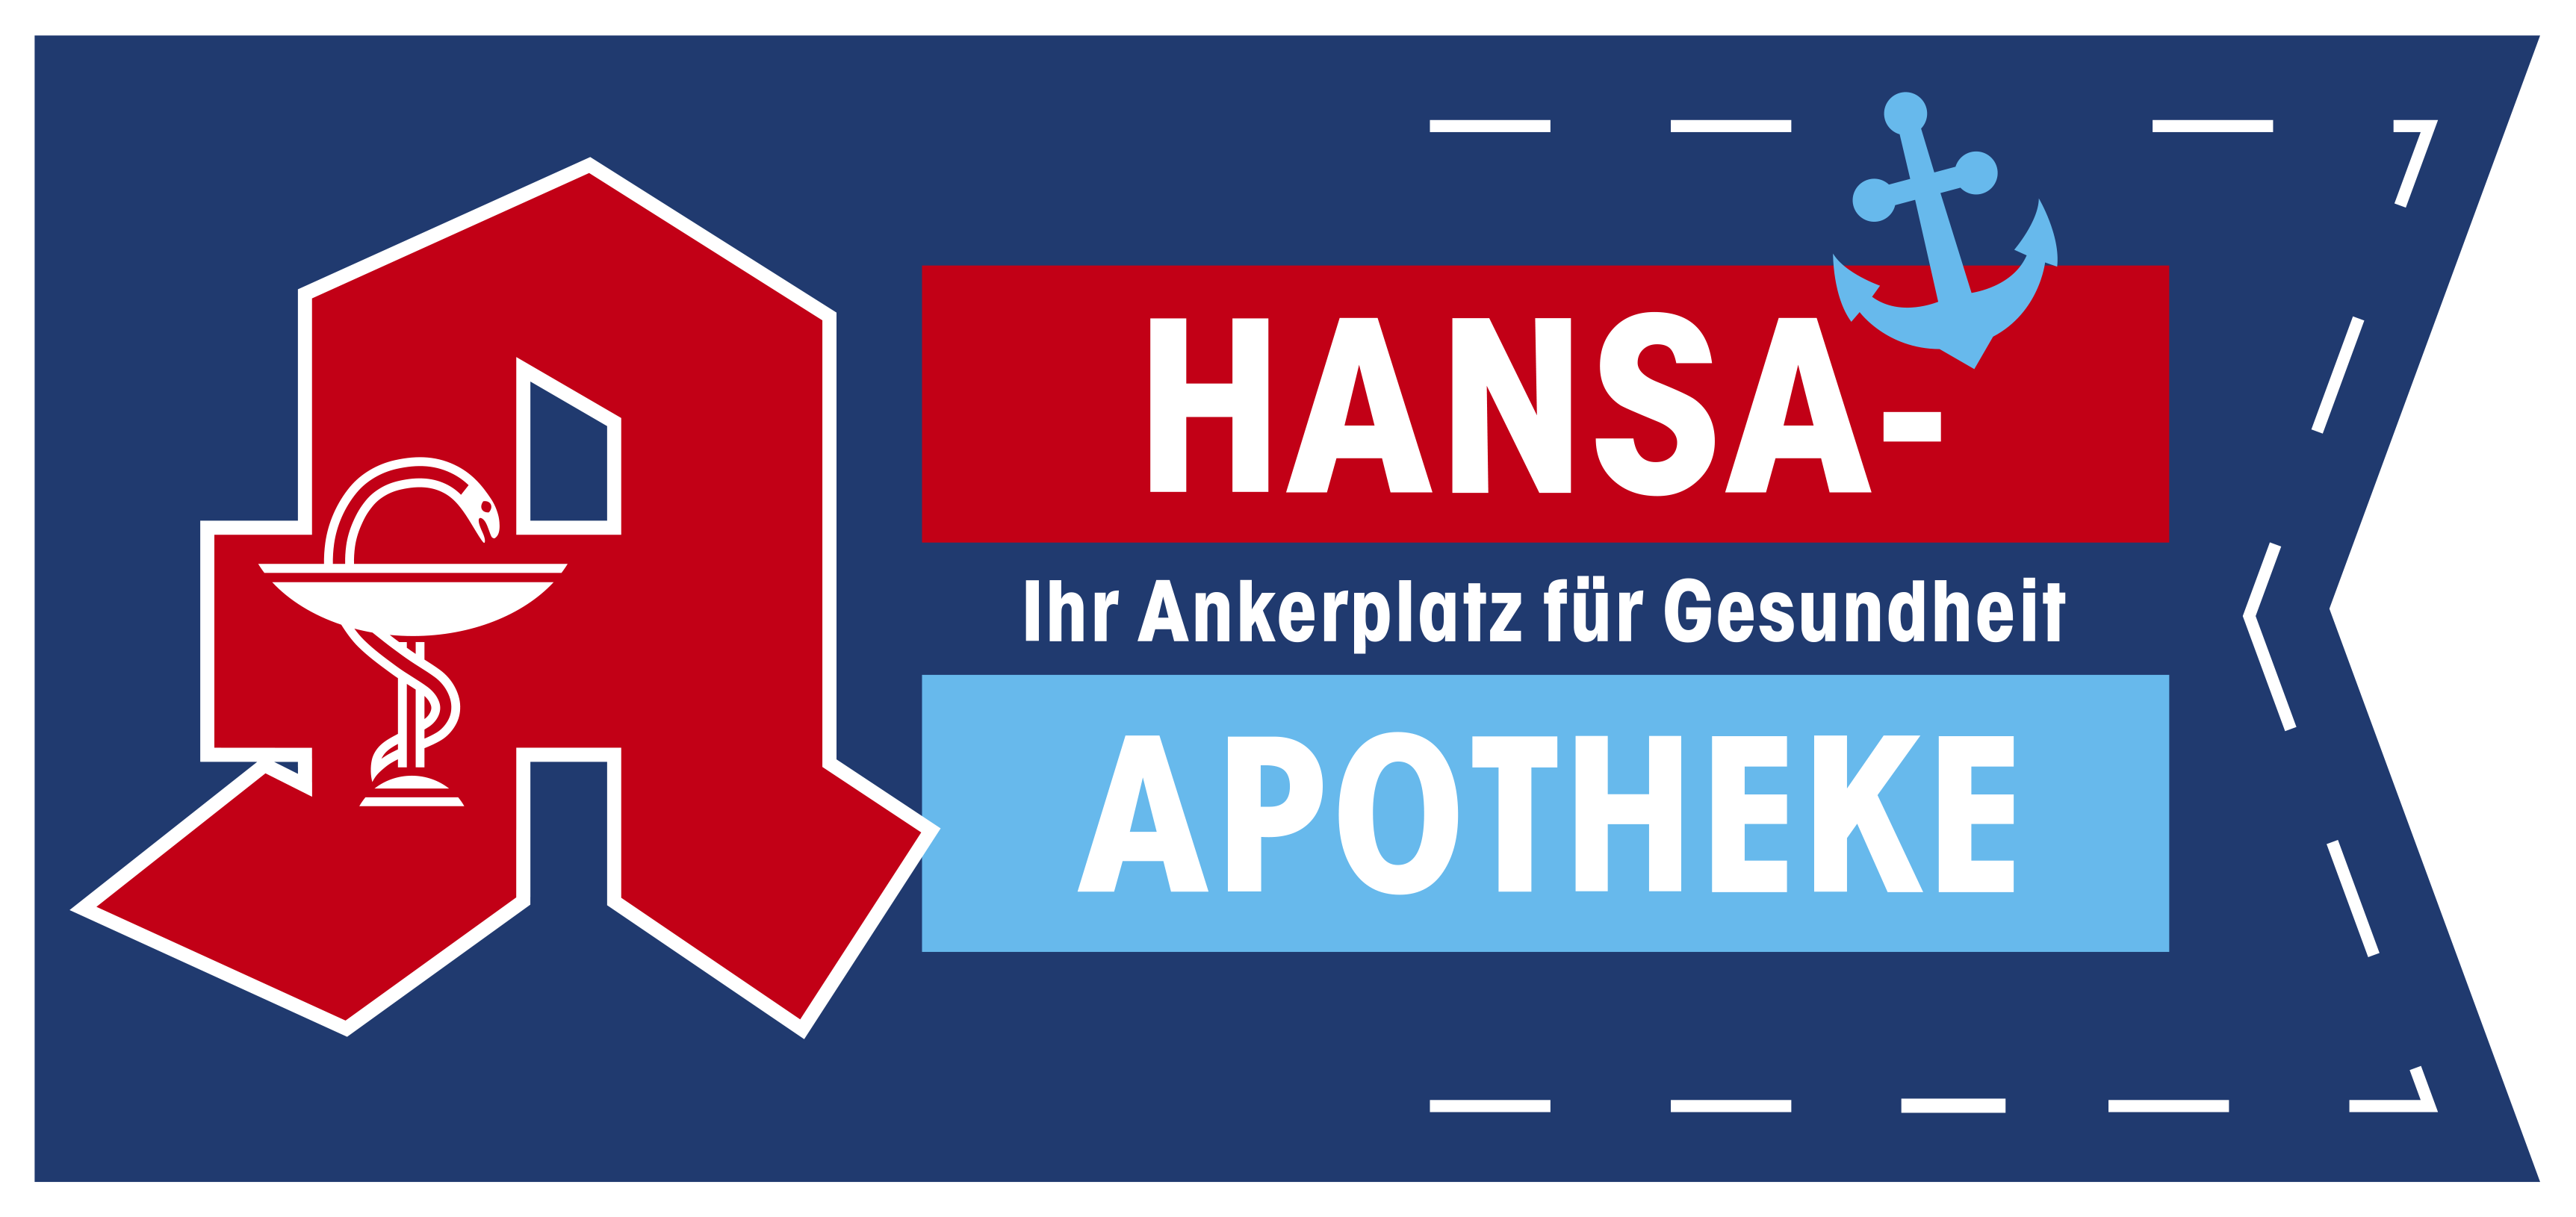 Hansa-Apotheke